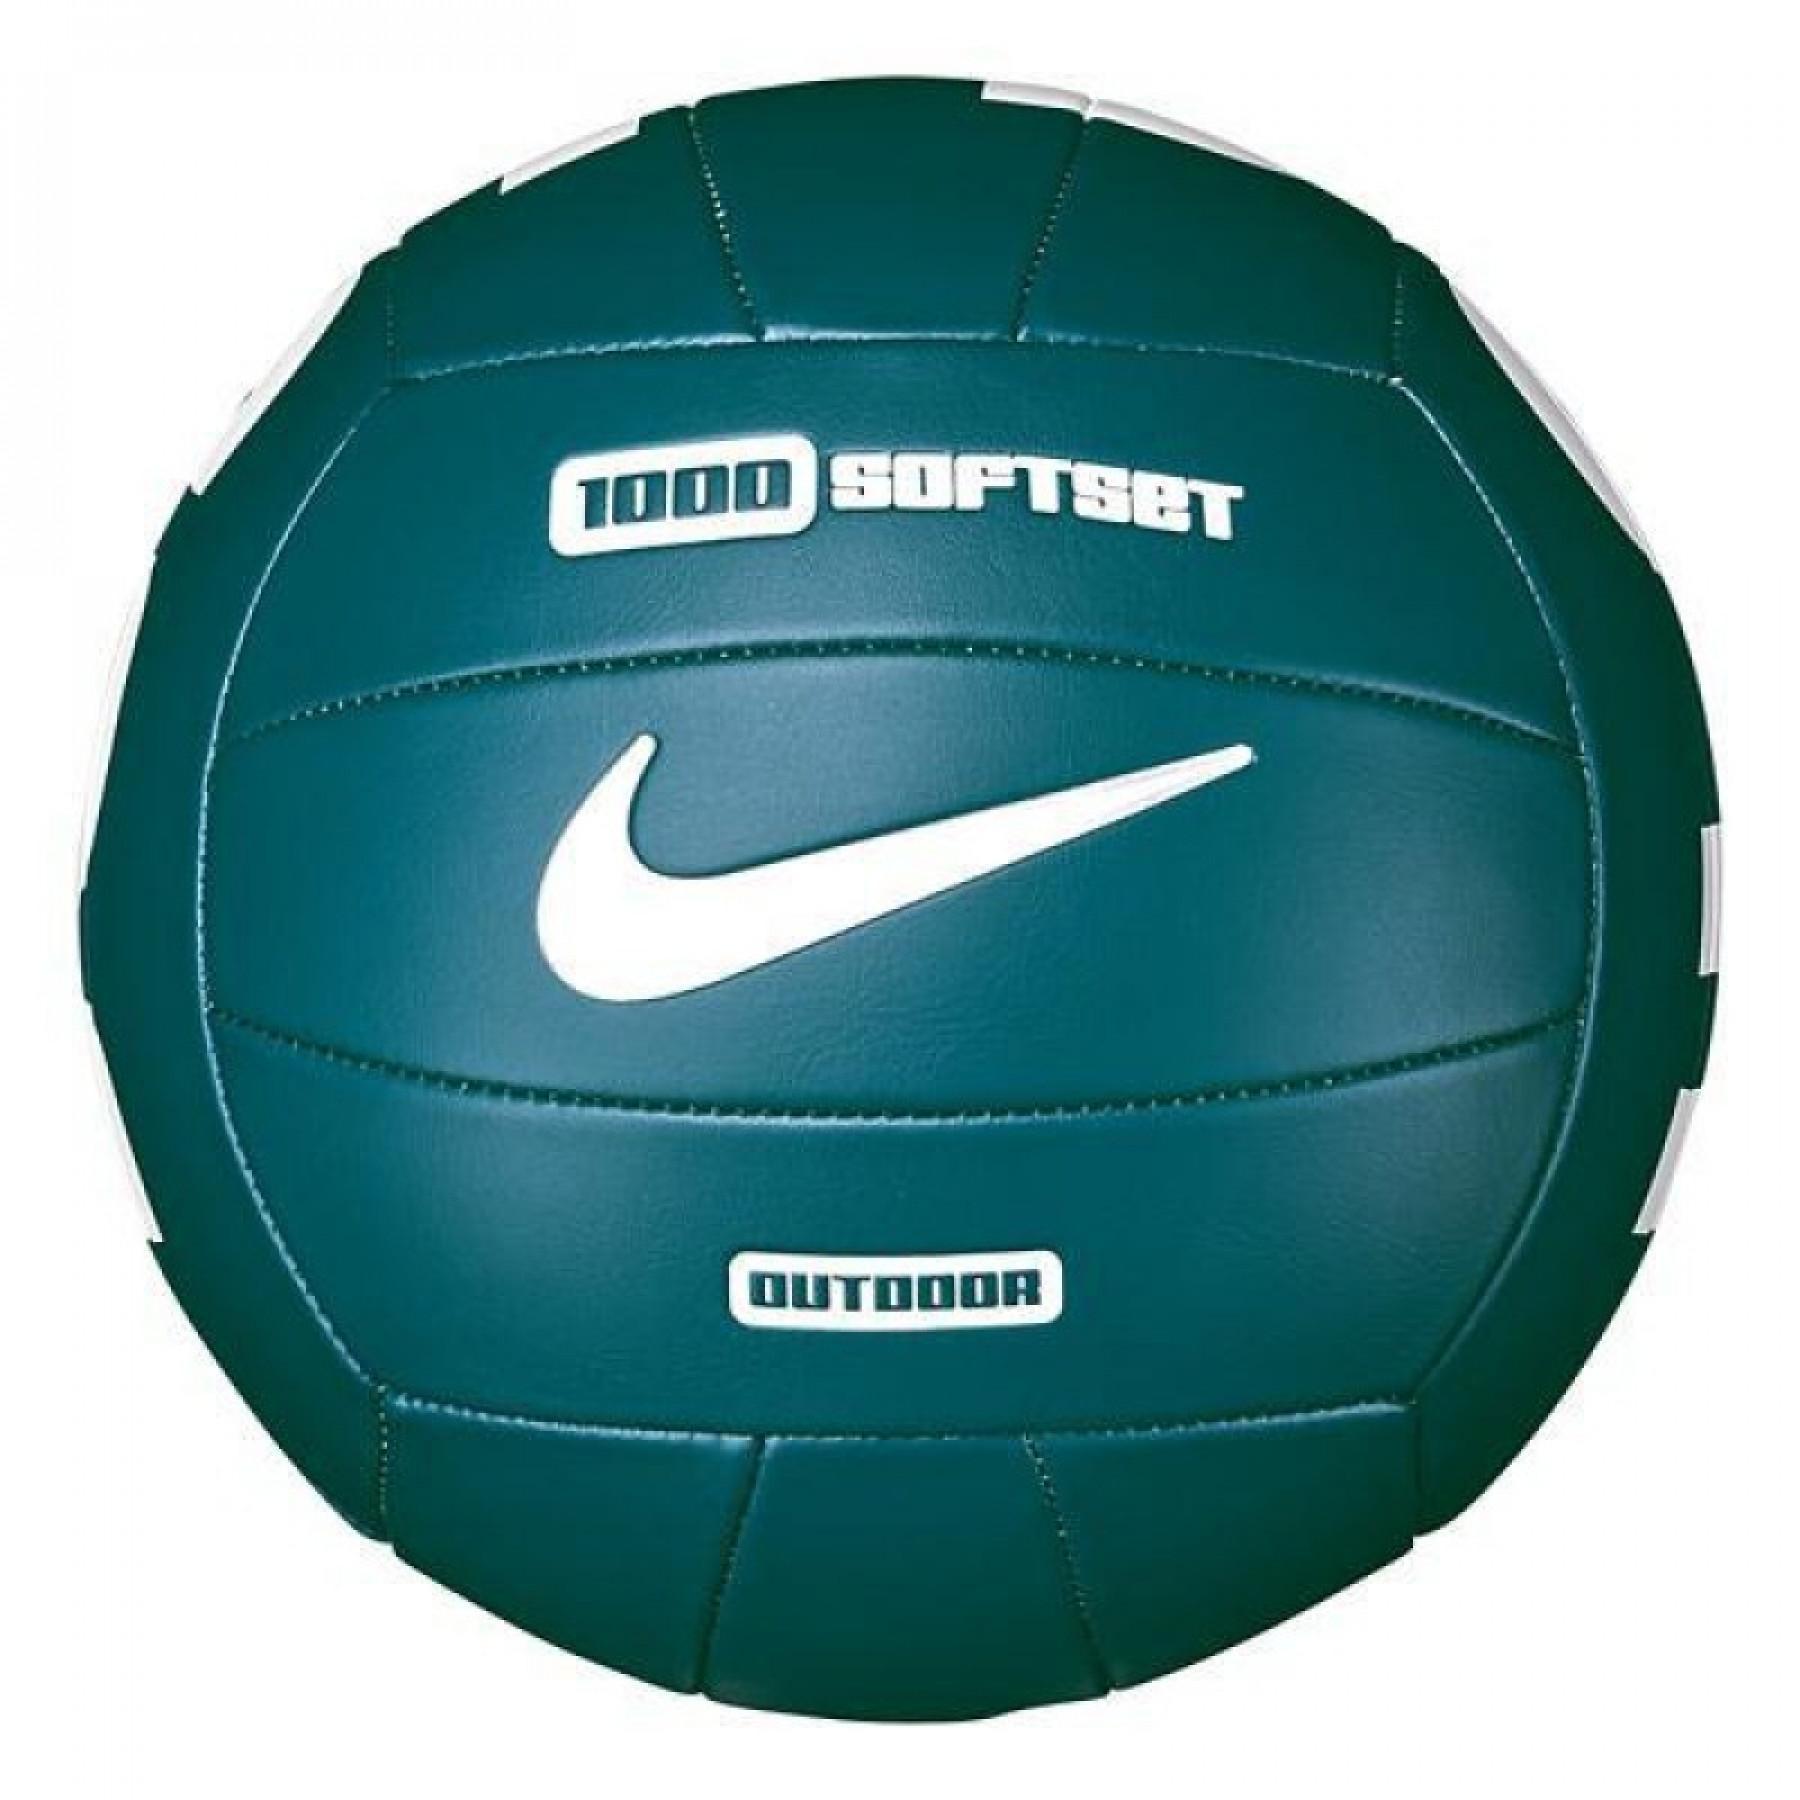 Lot de 3 Ballons Nike 1000 softset outdoor 